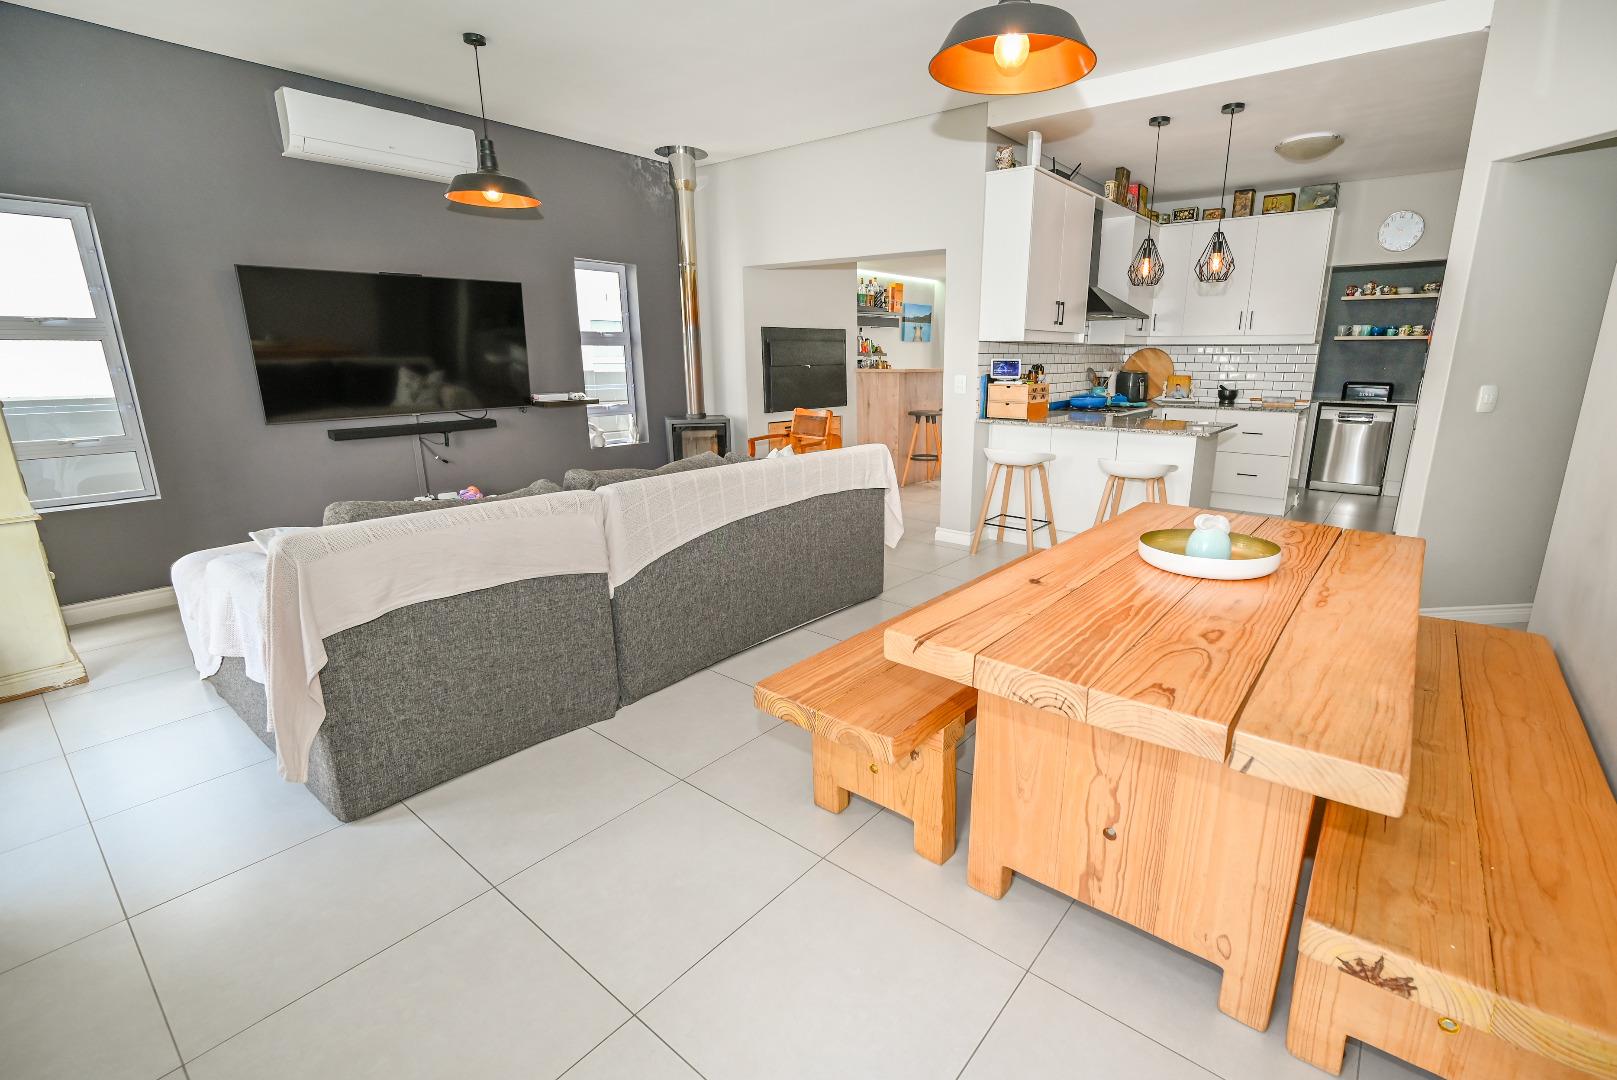 3 Bedroom  House for Sale in Kraaifontein - Western Cape